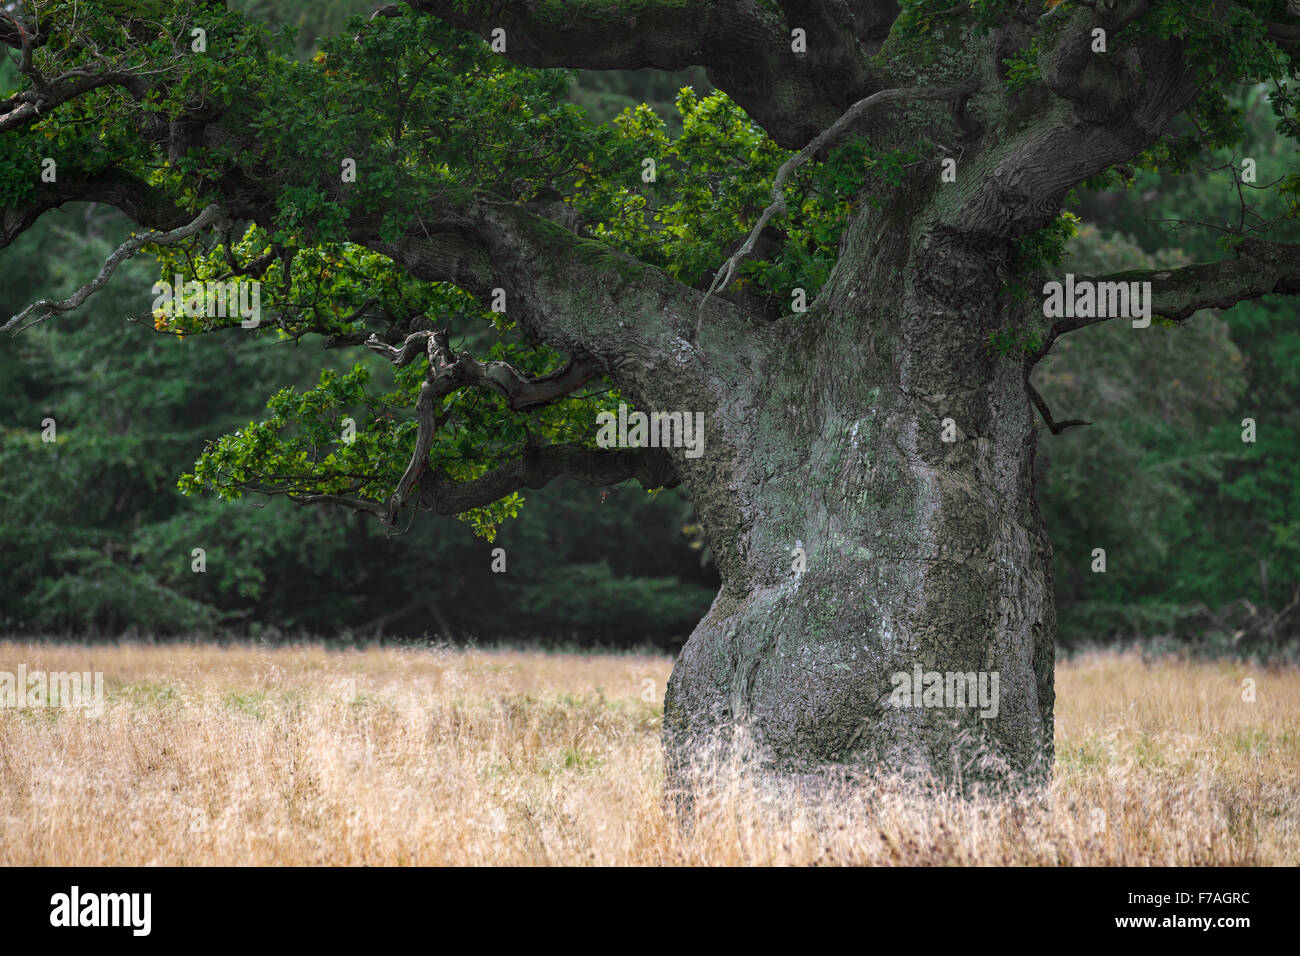 Old English oak / pedunculate oak / French oak tree (Quercus robur) in grassland at forest's edge Stock Photo